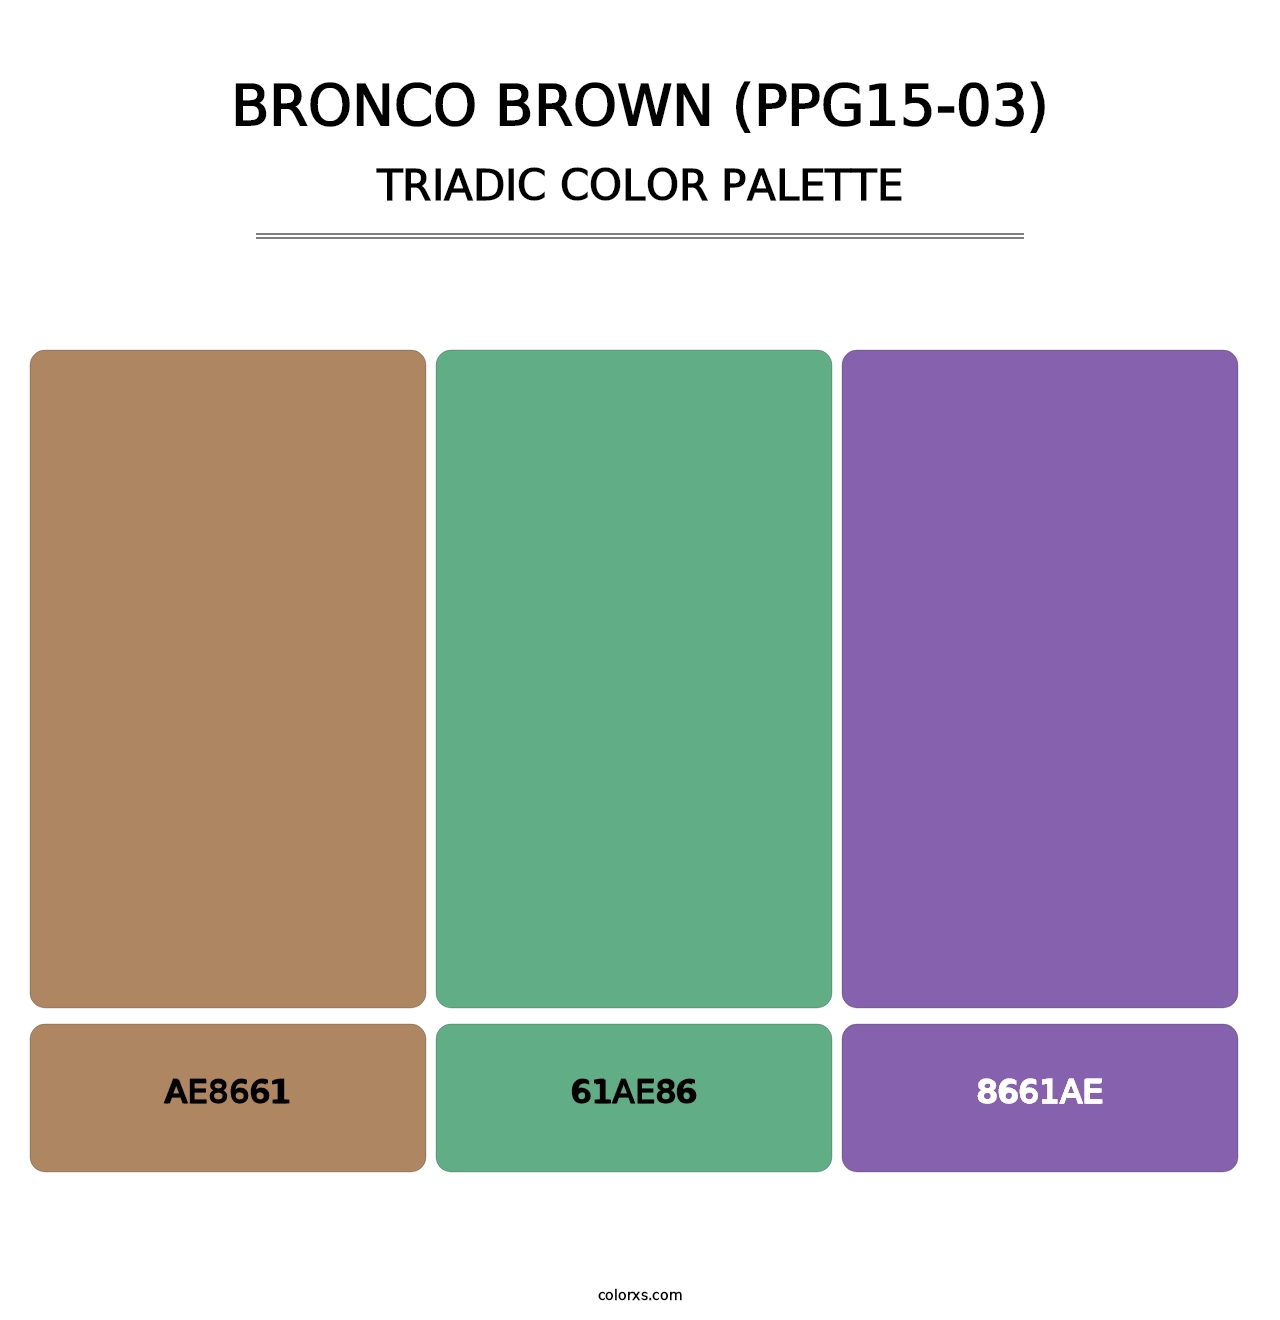 Bronco Brown (PPG15-03) - Triadic Color Palette